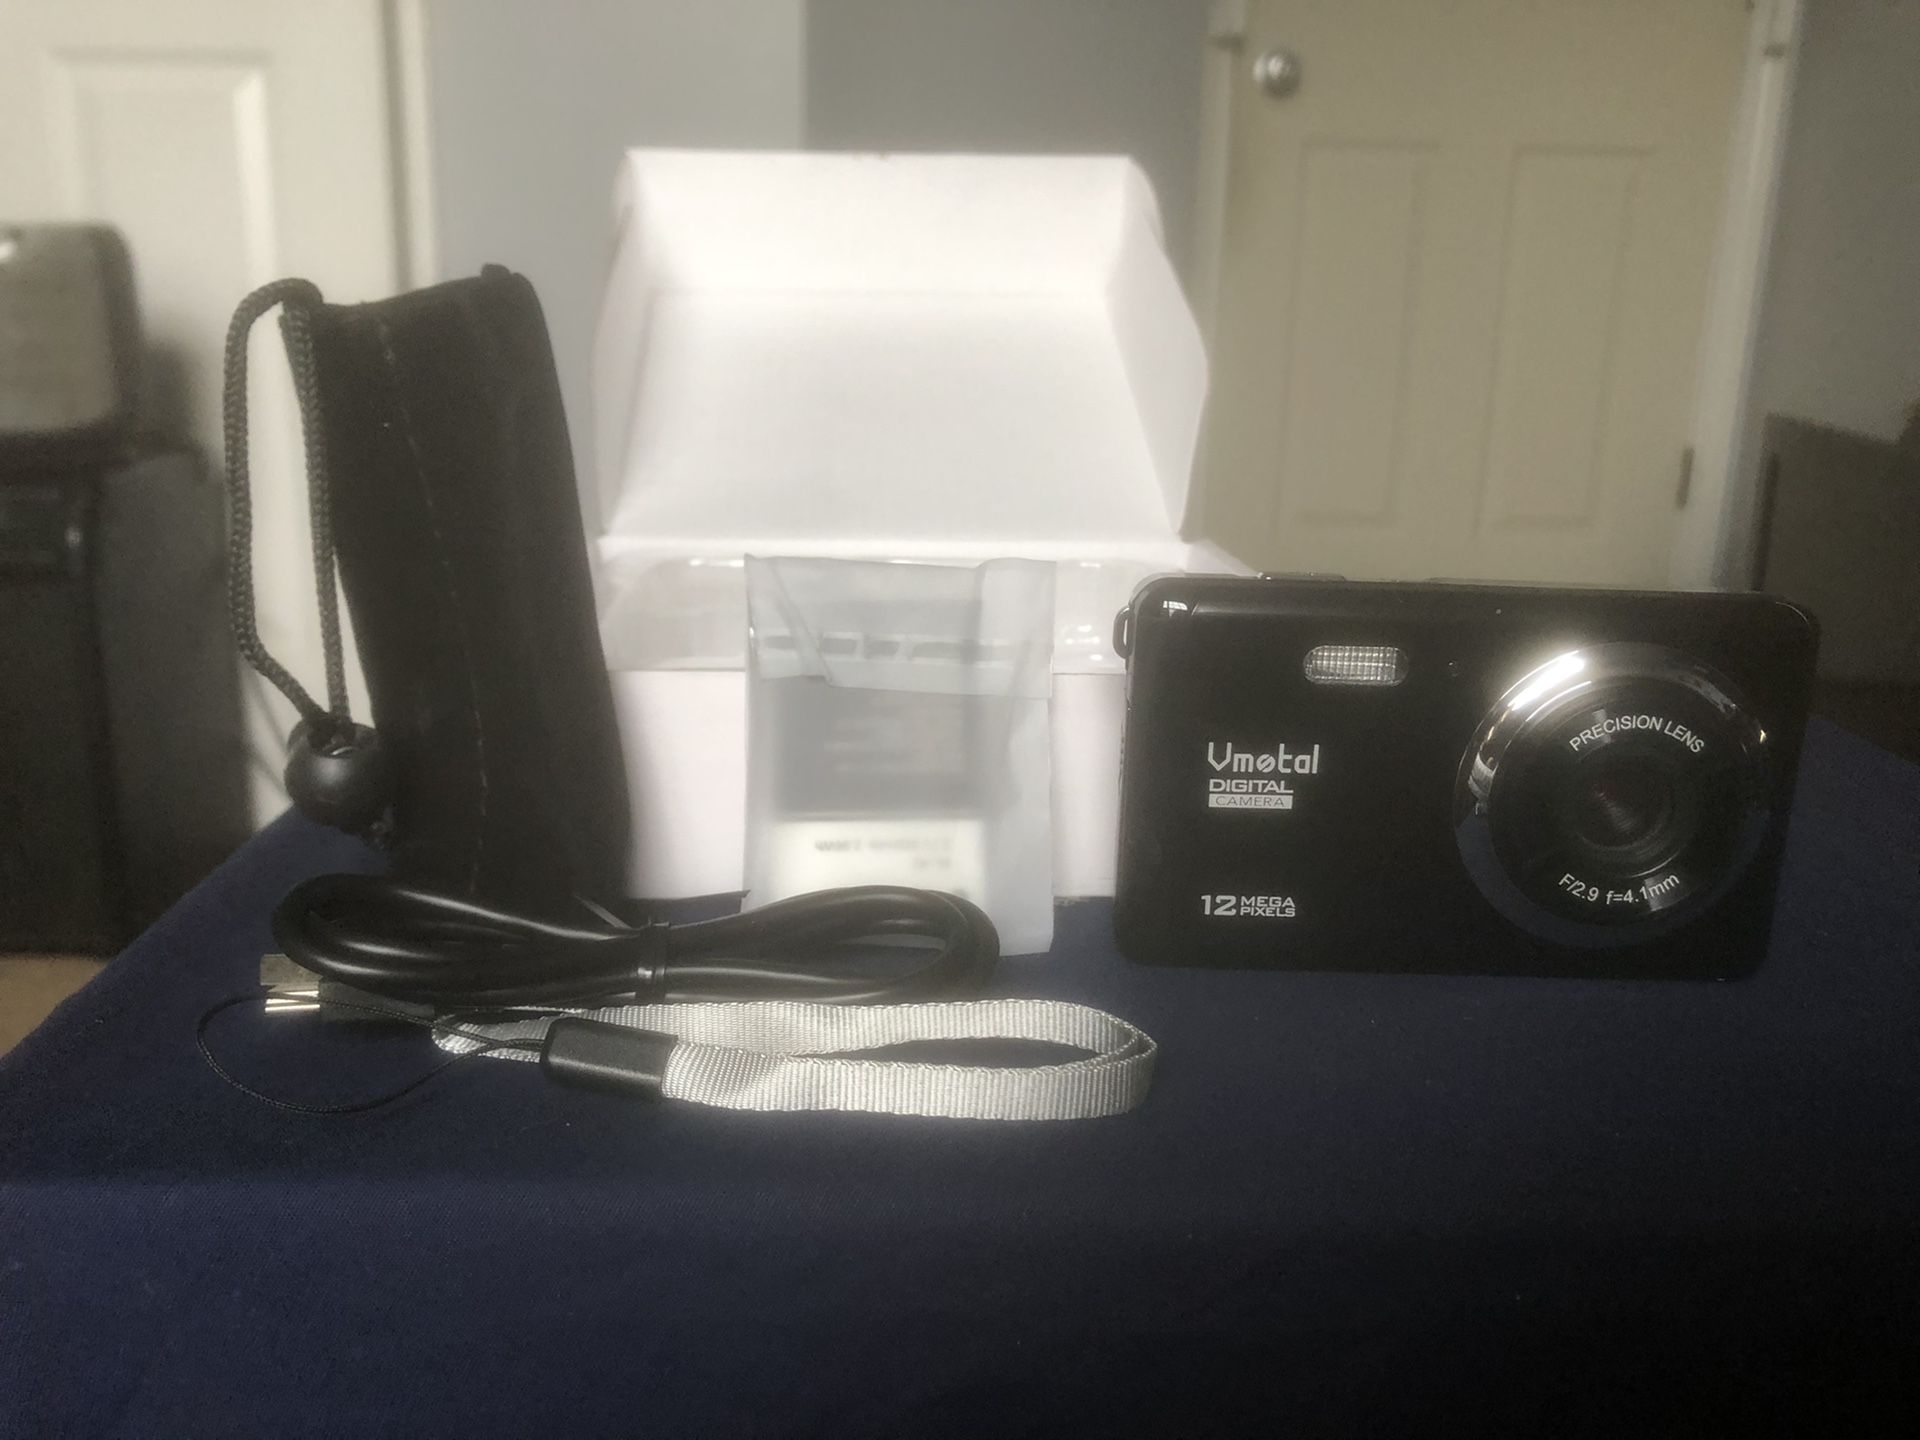 Mini Digital Camera